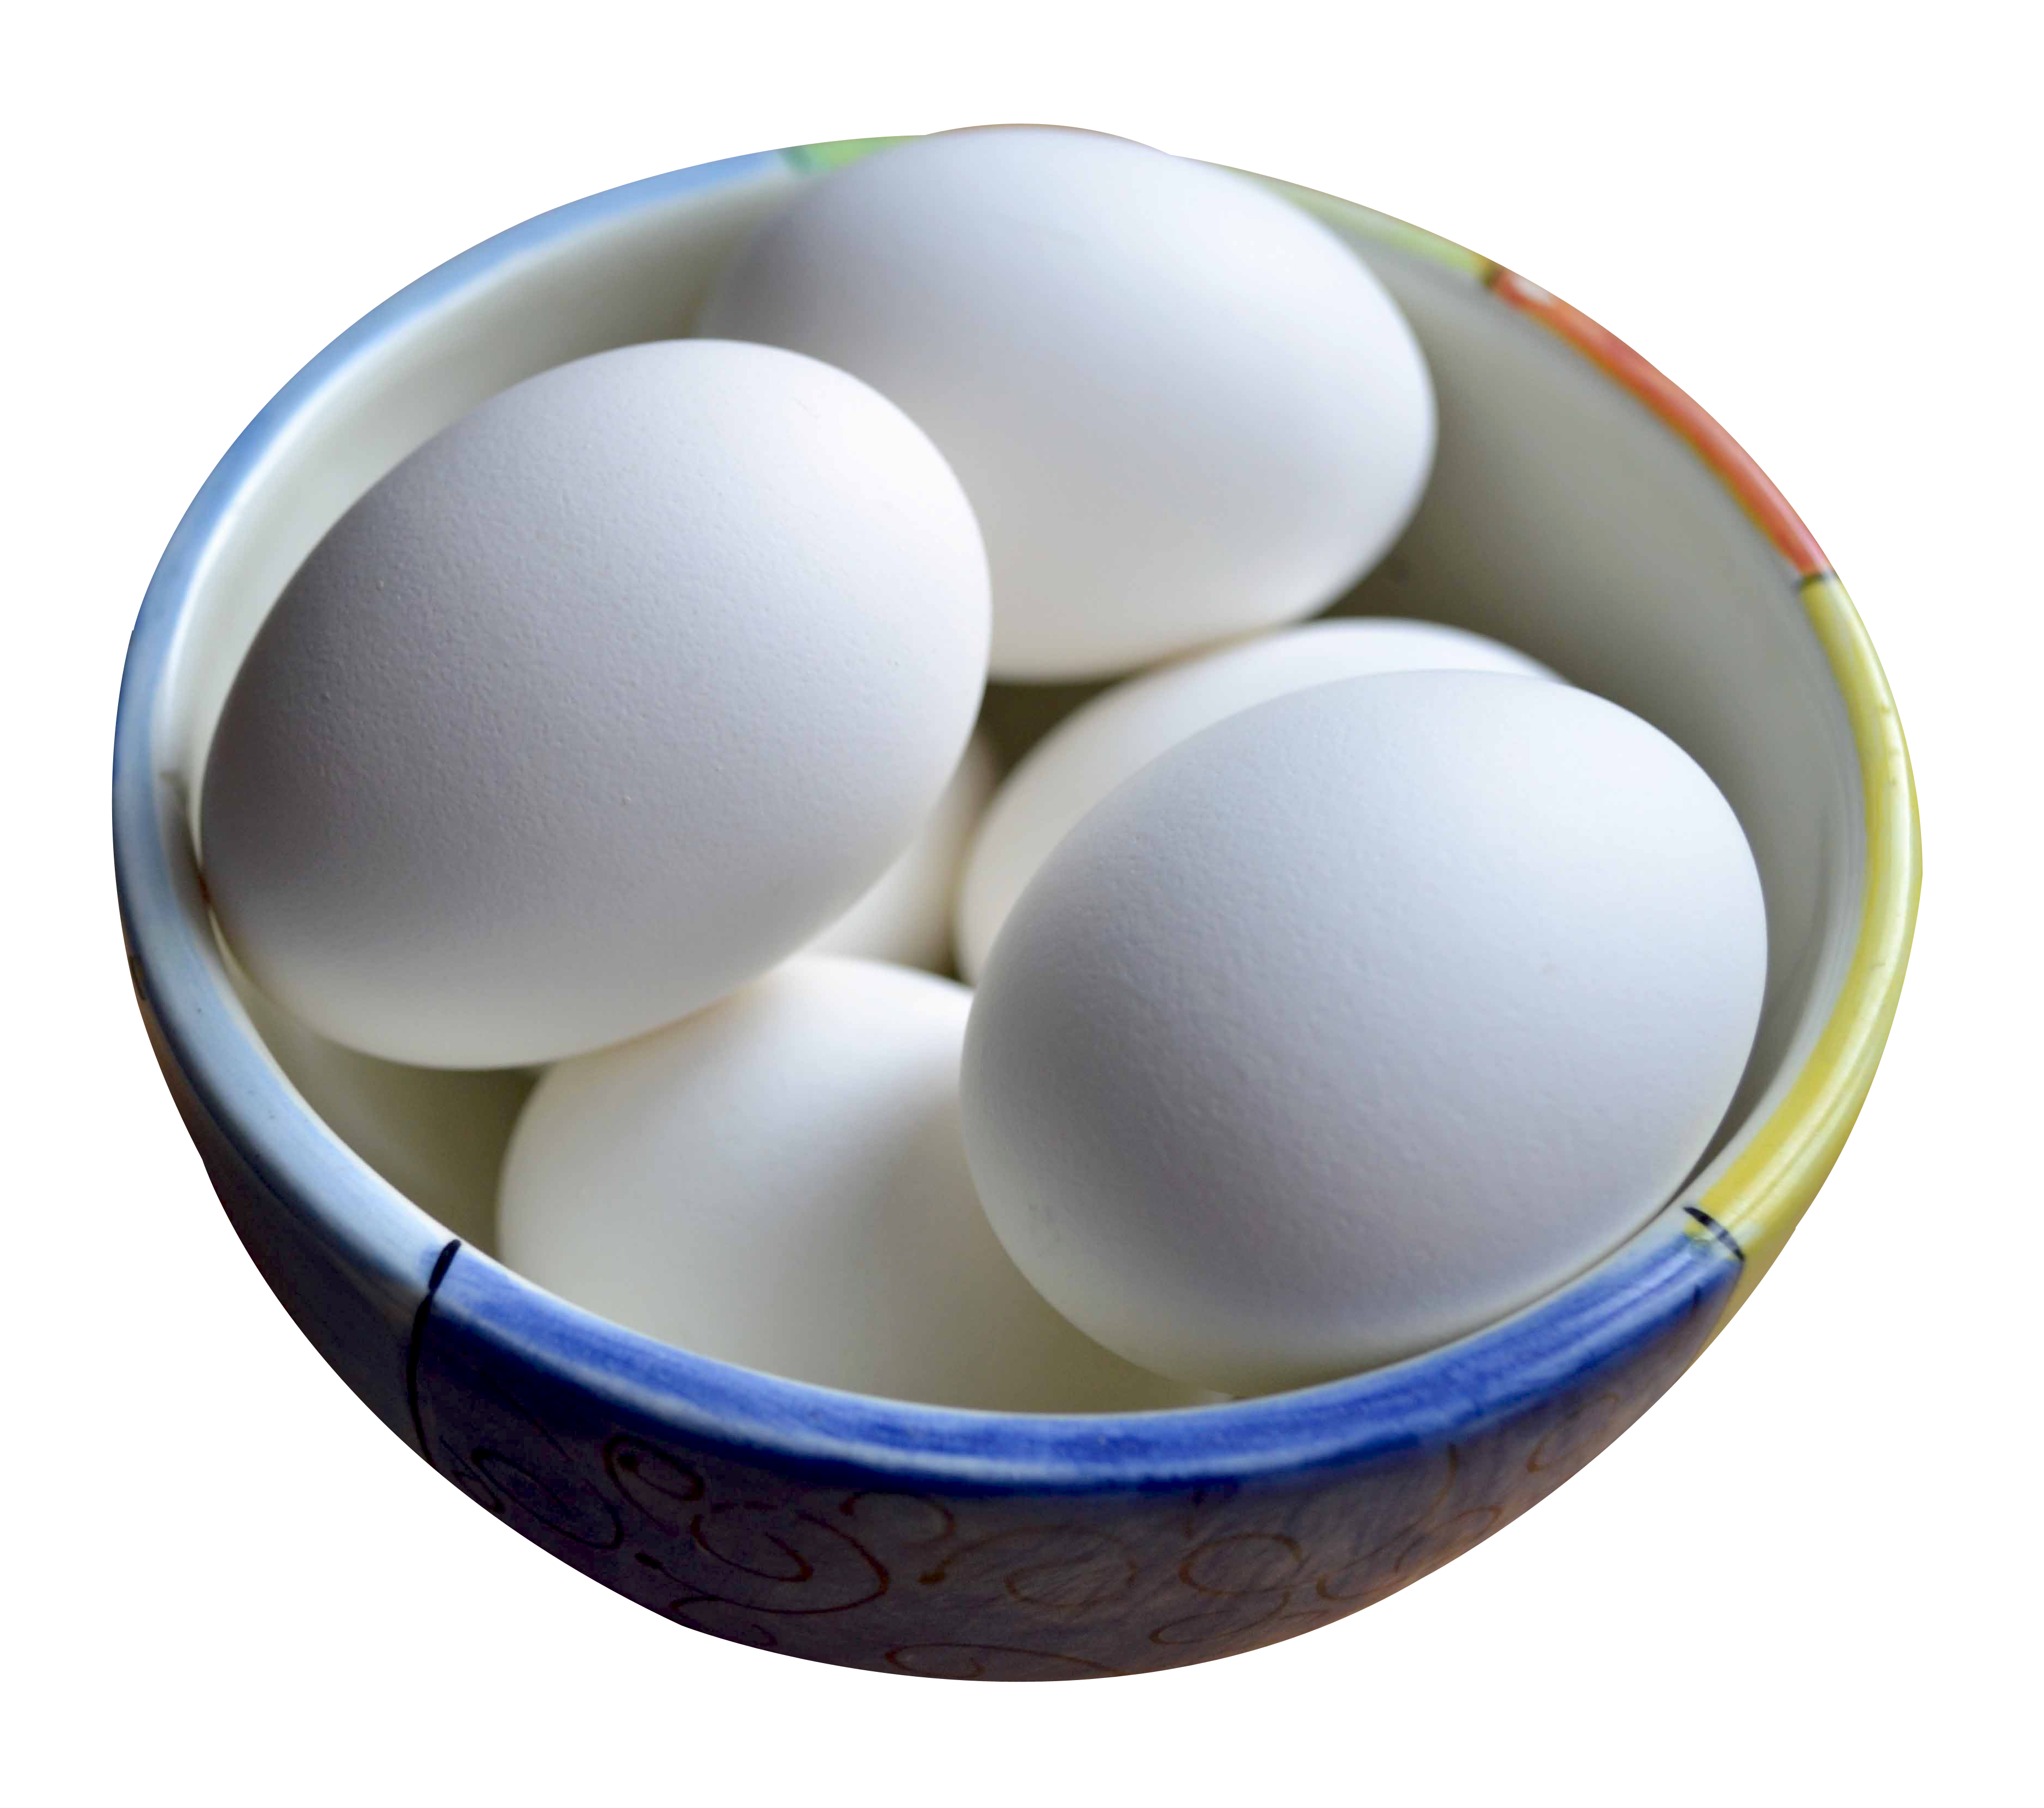 Egg PNG Image